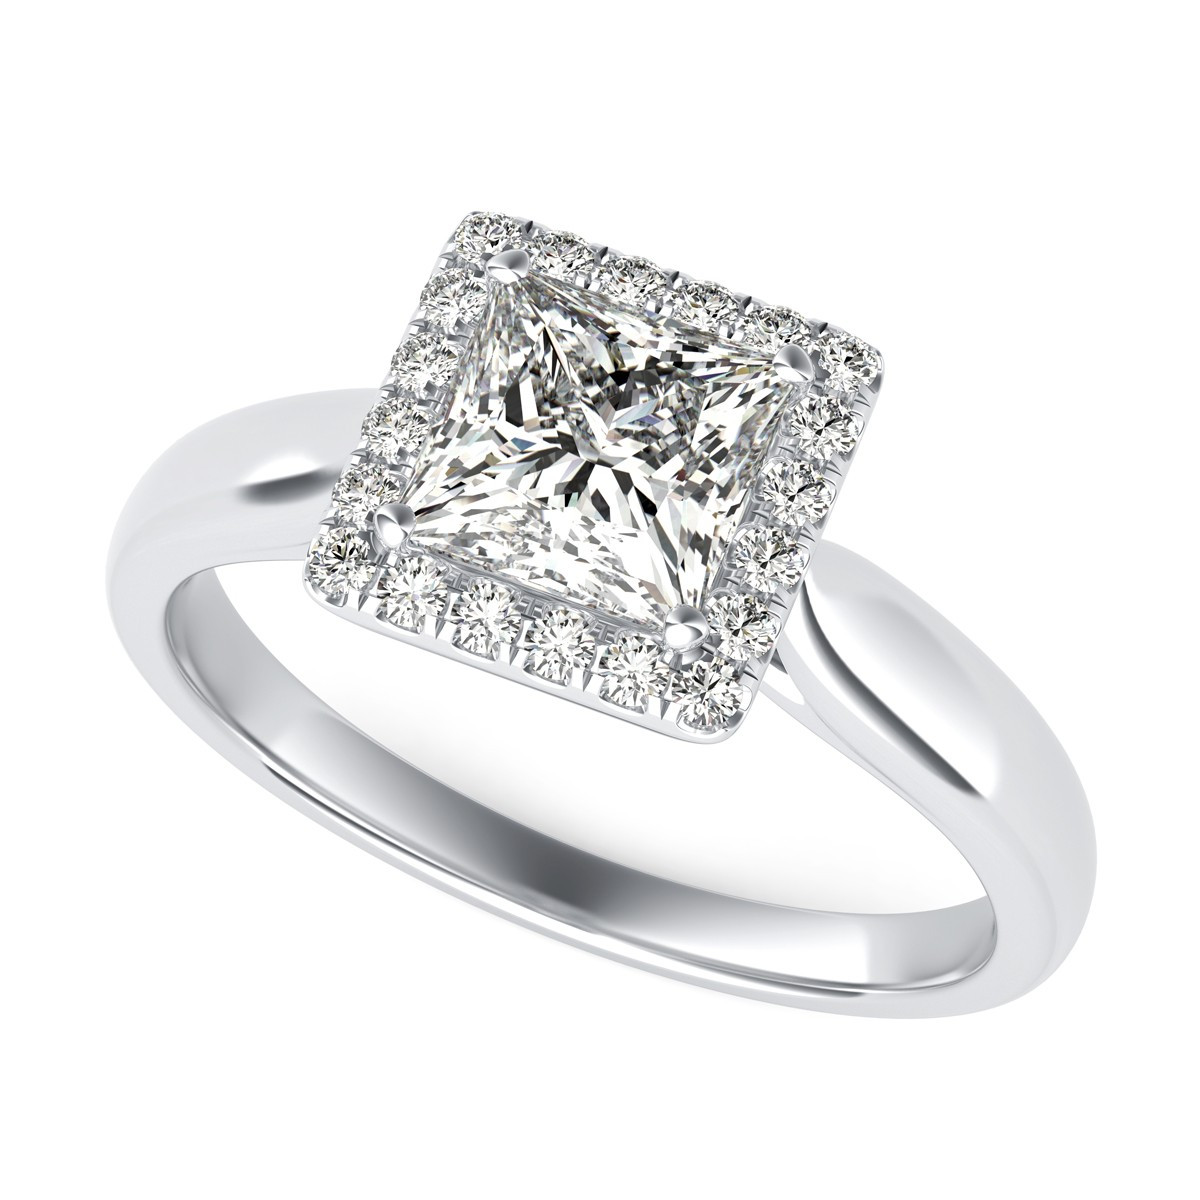 Princess Cut Halo Diamond Engagement Rings
 Halo Diamond Engagement Ring